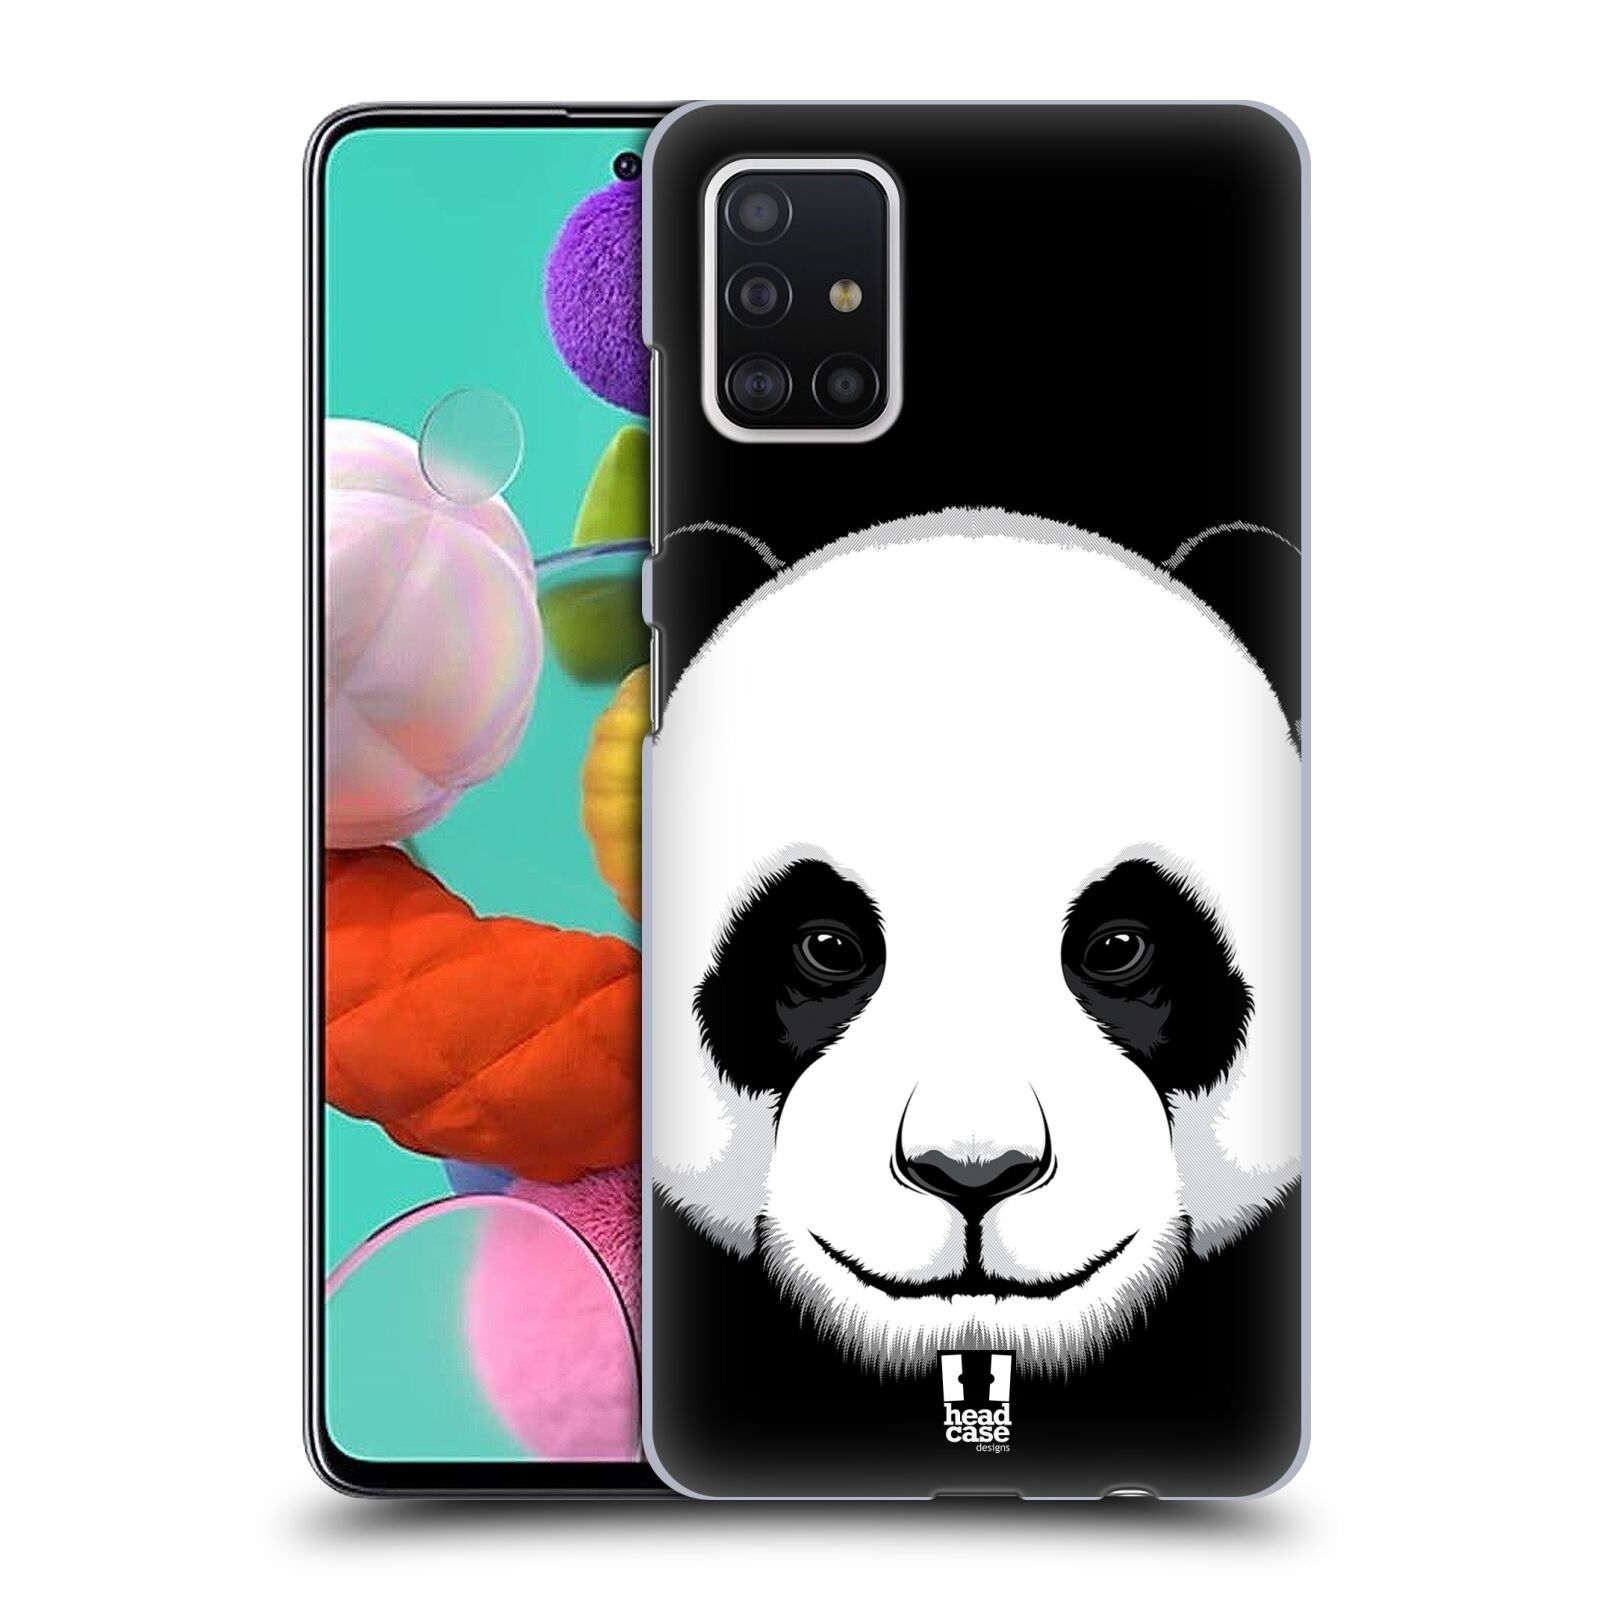 Pouzdro na mobil Samsung Galaxy A51 - HEAD CASE - vzor Zvíře kreslená tvář panda